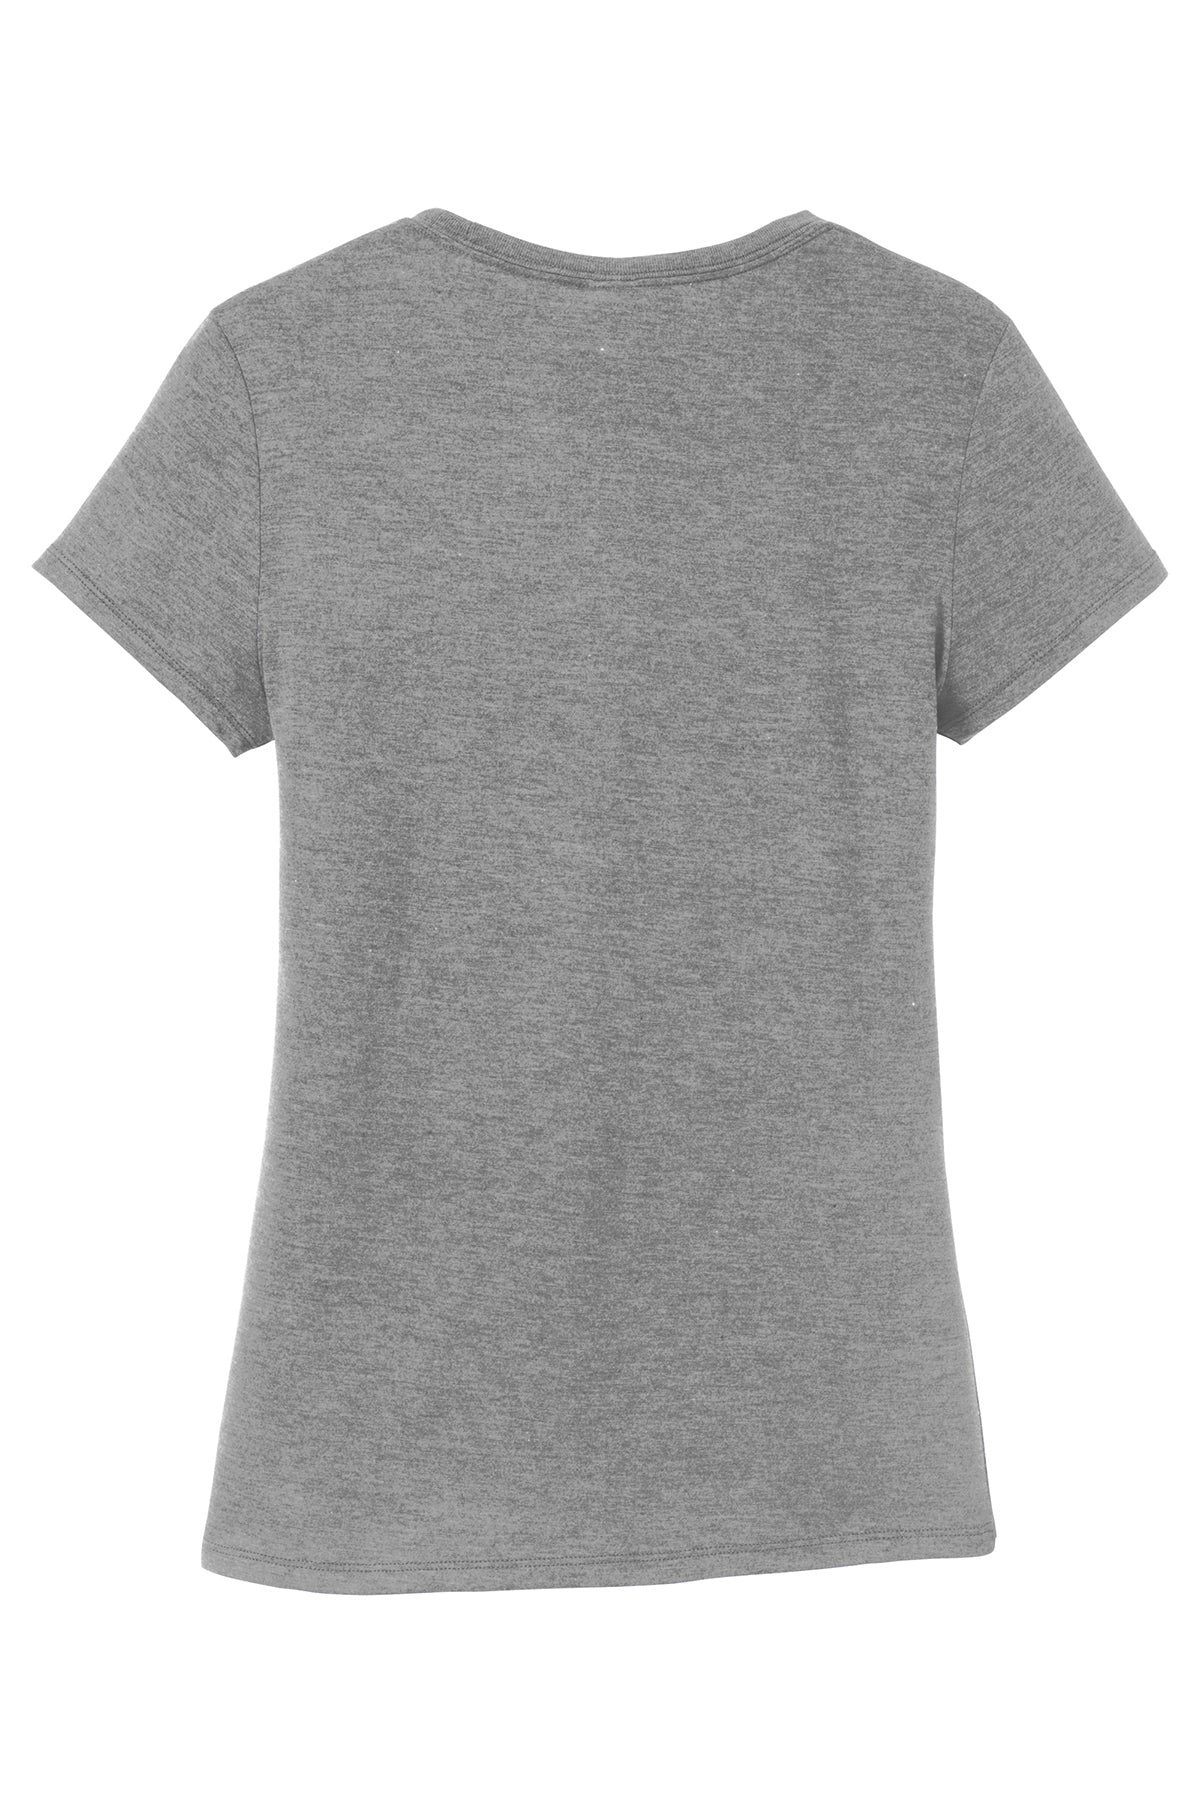 Hardwood - District Women’s Perfect Tri T-Shirt - Grey - IMS Apparel